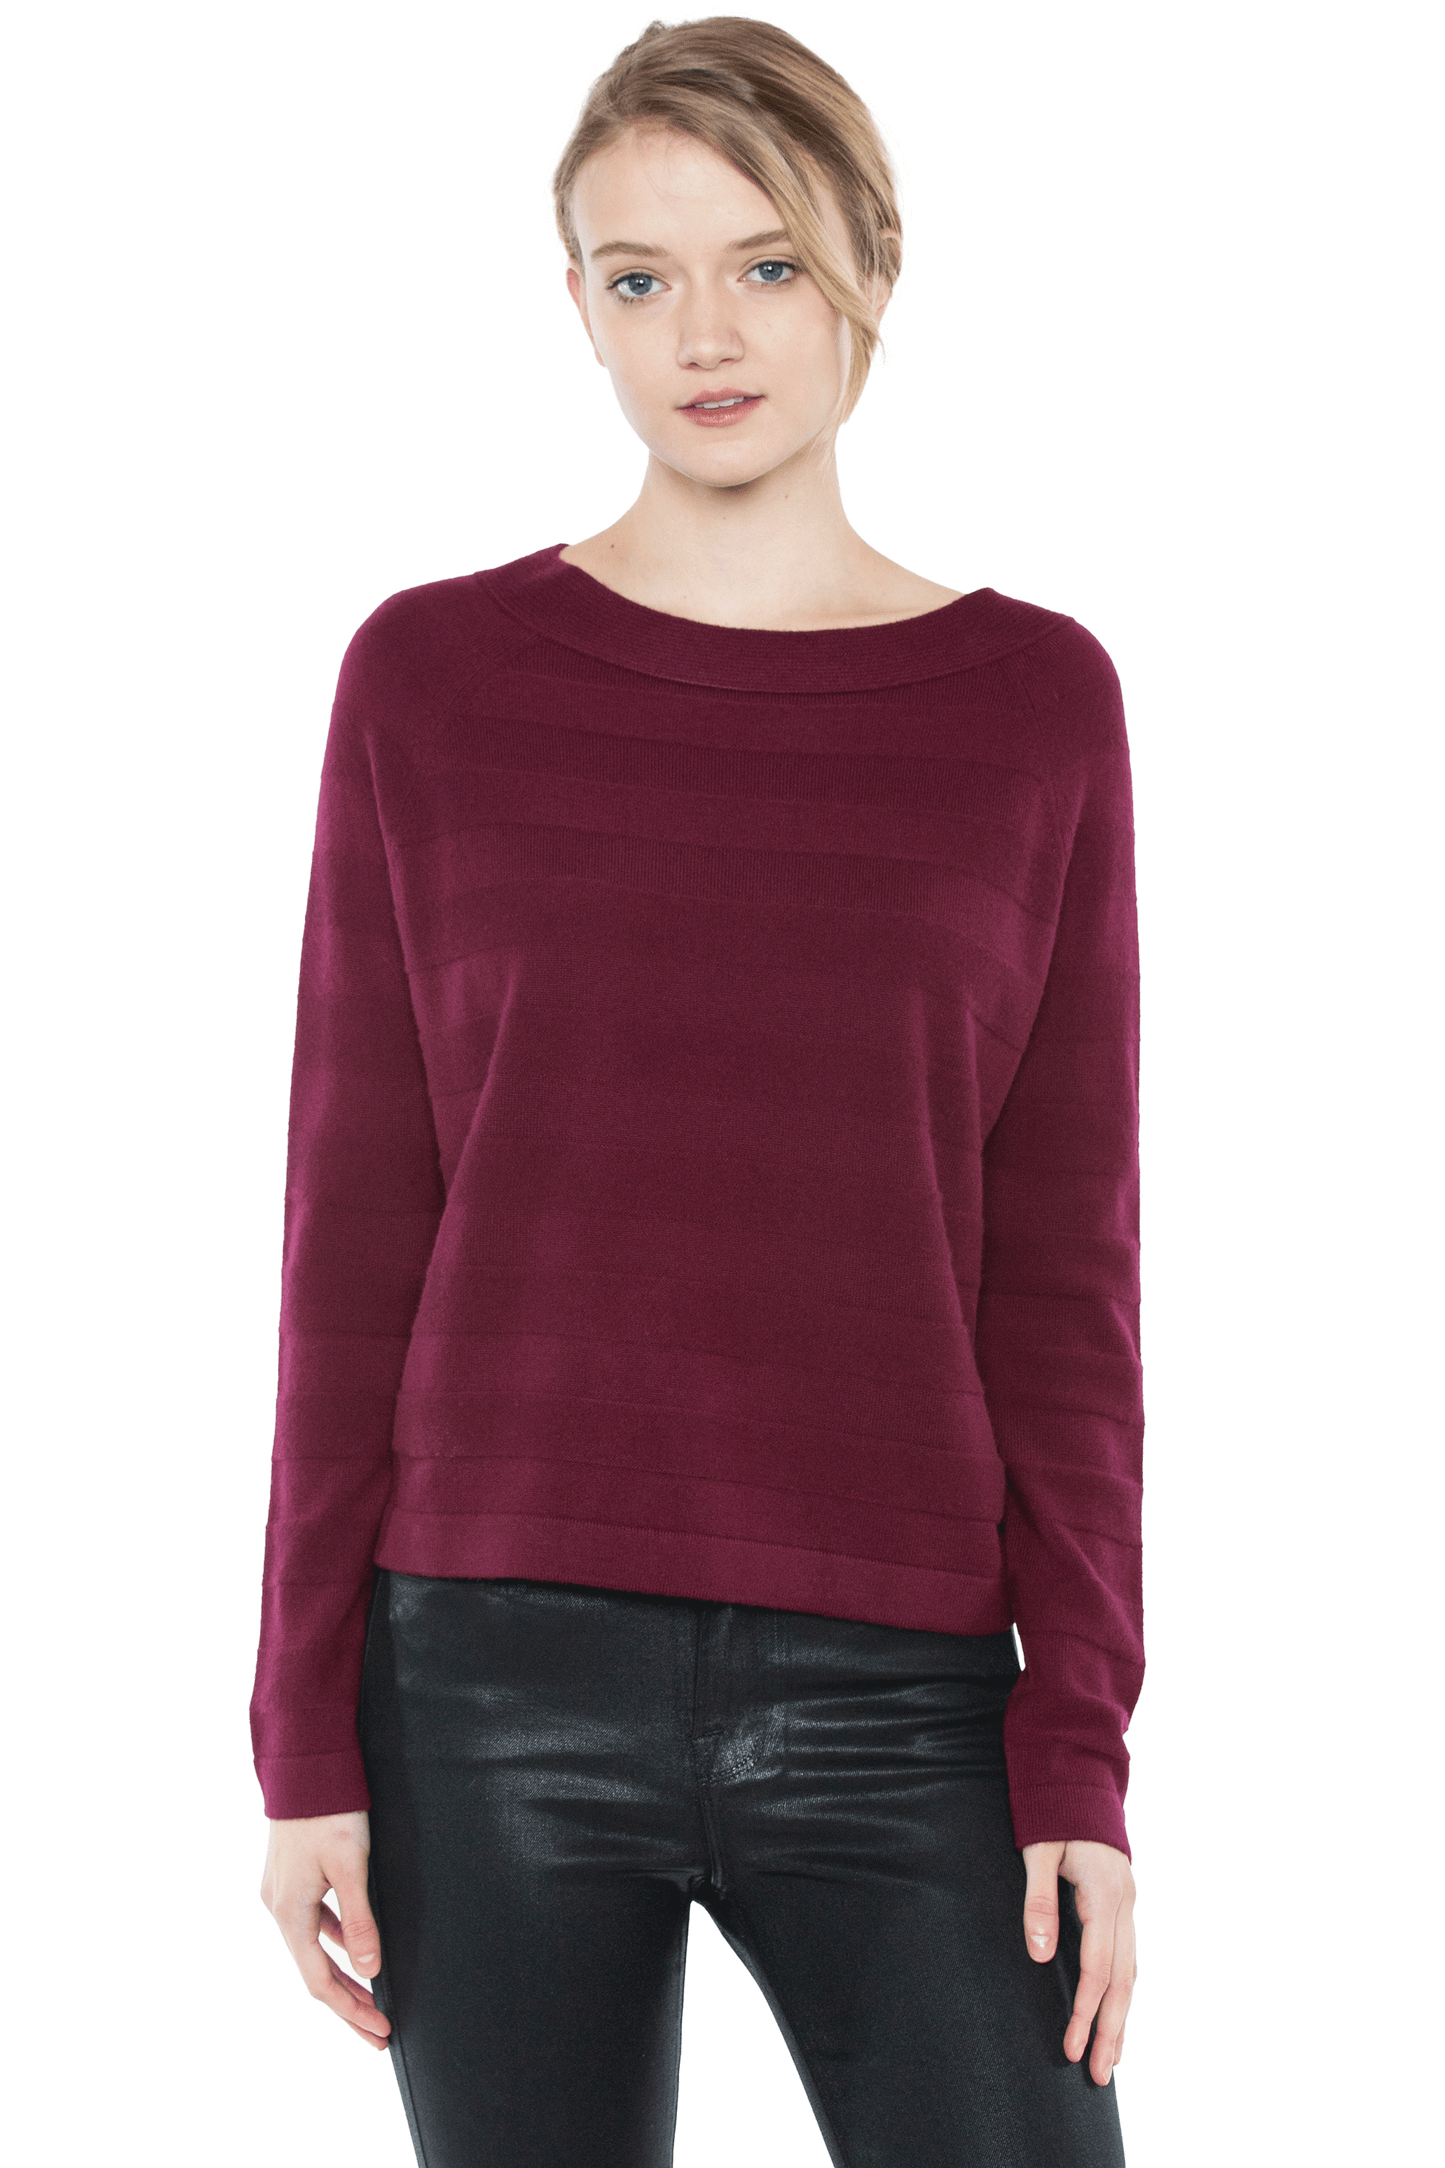 J CASHMERE Women's 100% Pure Cashmere Horizontal Rib Boatneck Raglan Sweater